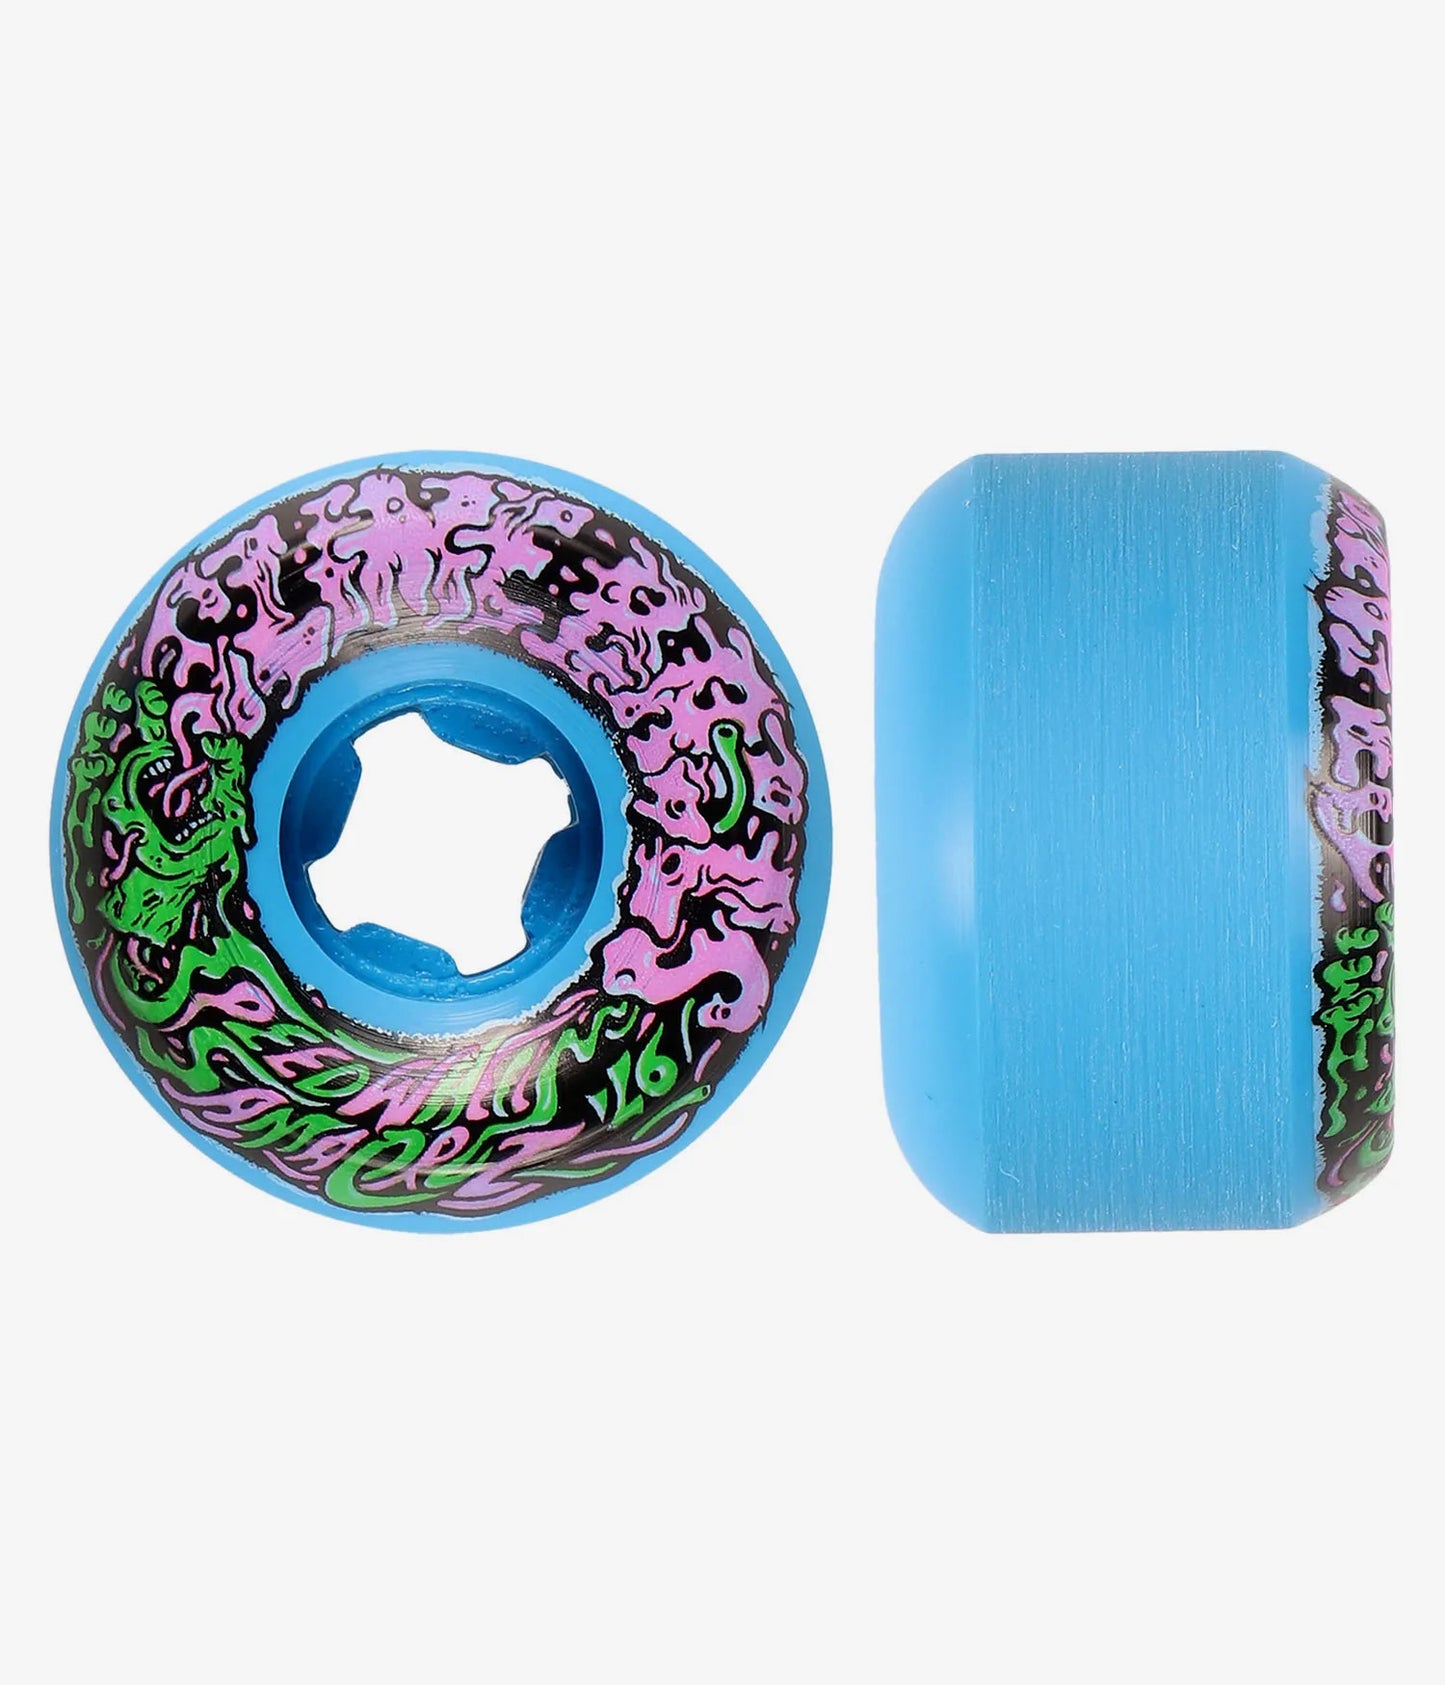 Slime Balls Vomit Mini II Blue Skateboard Wheels 53mm 99a